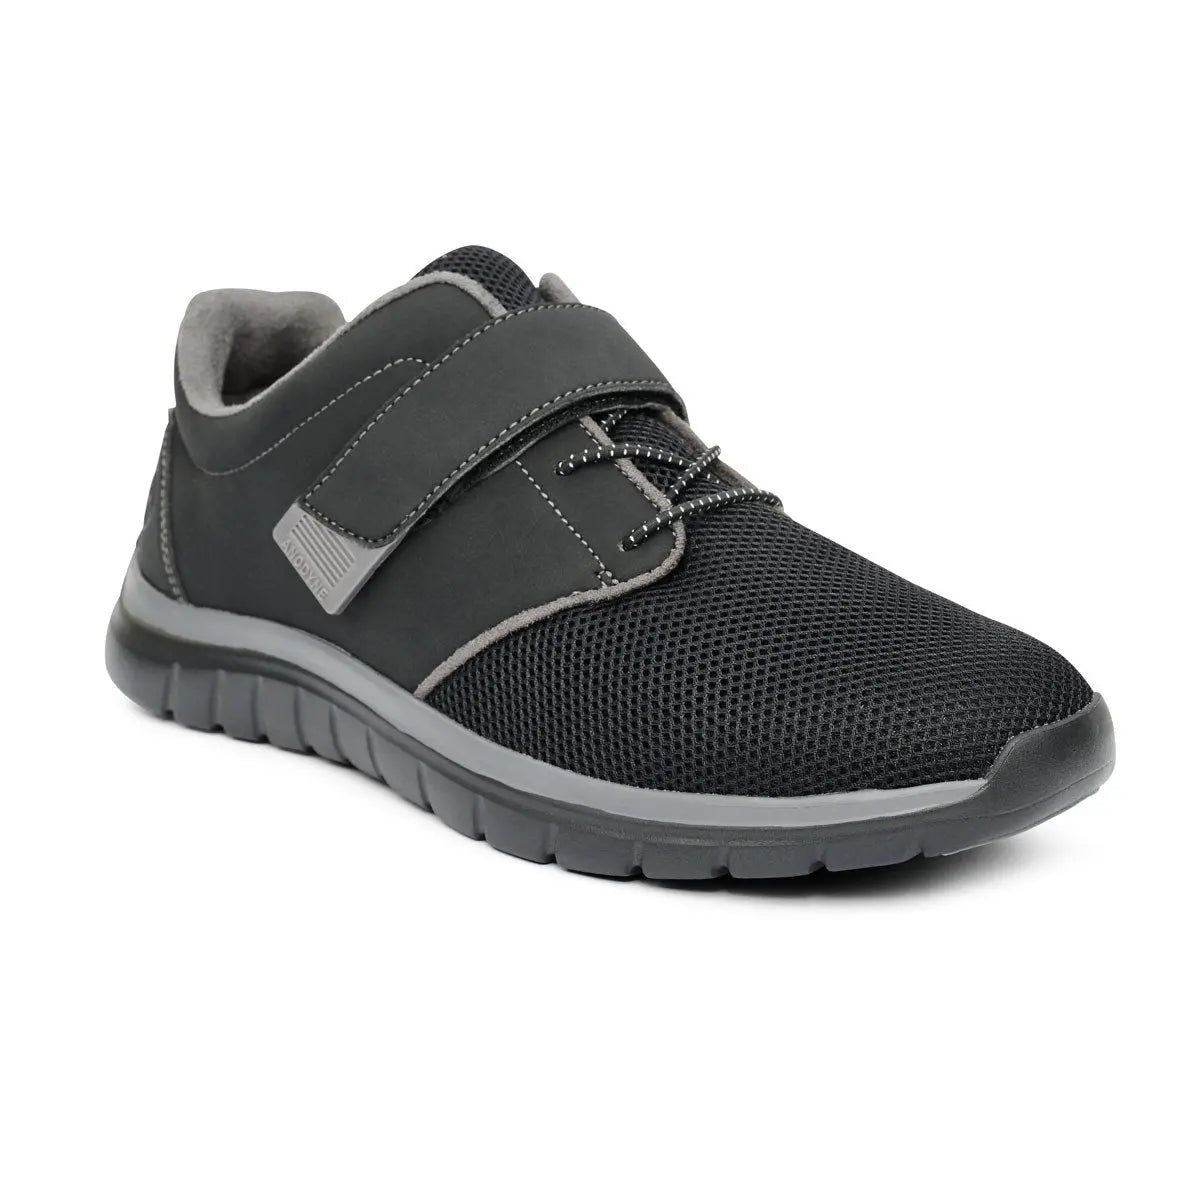 Anodyne No.46 Sport Jogger Men's Diabetic Shoe, Black - Main Image | Dahl Medical Supply